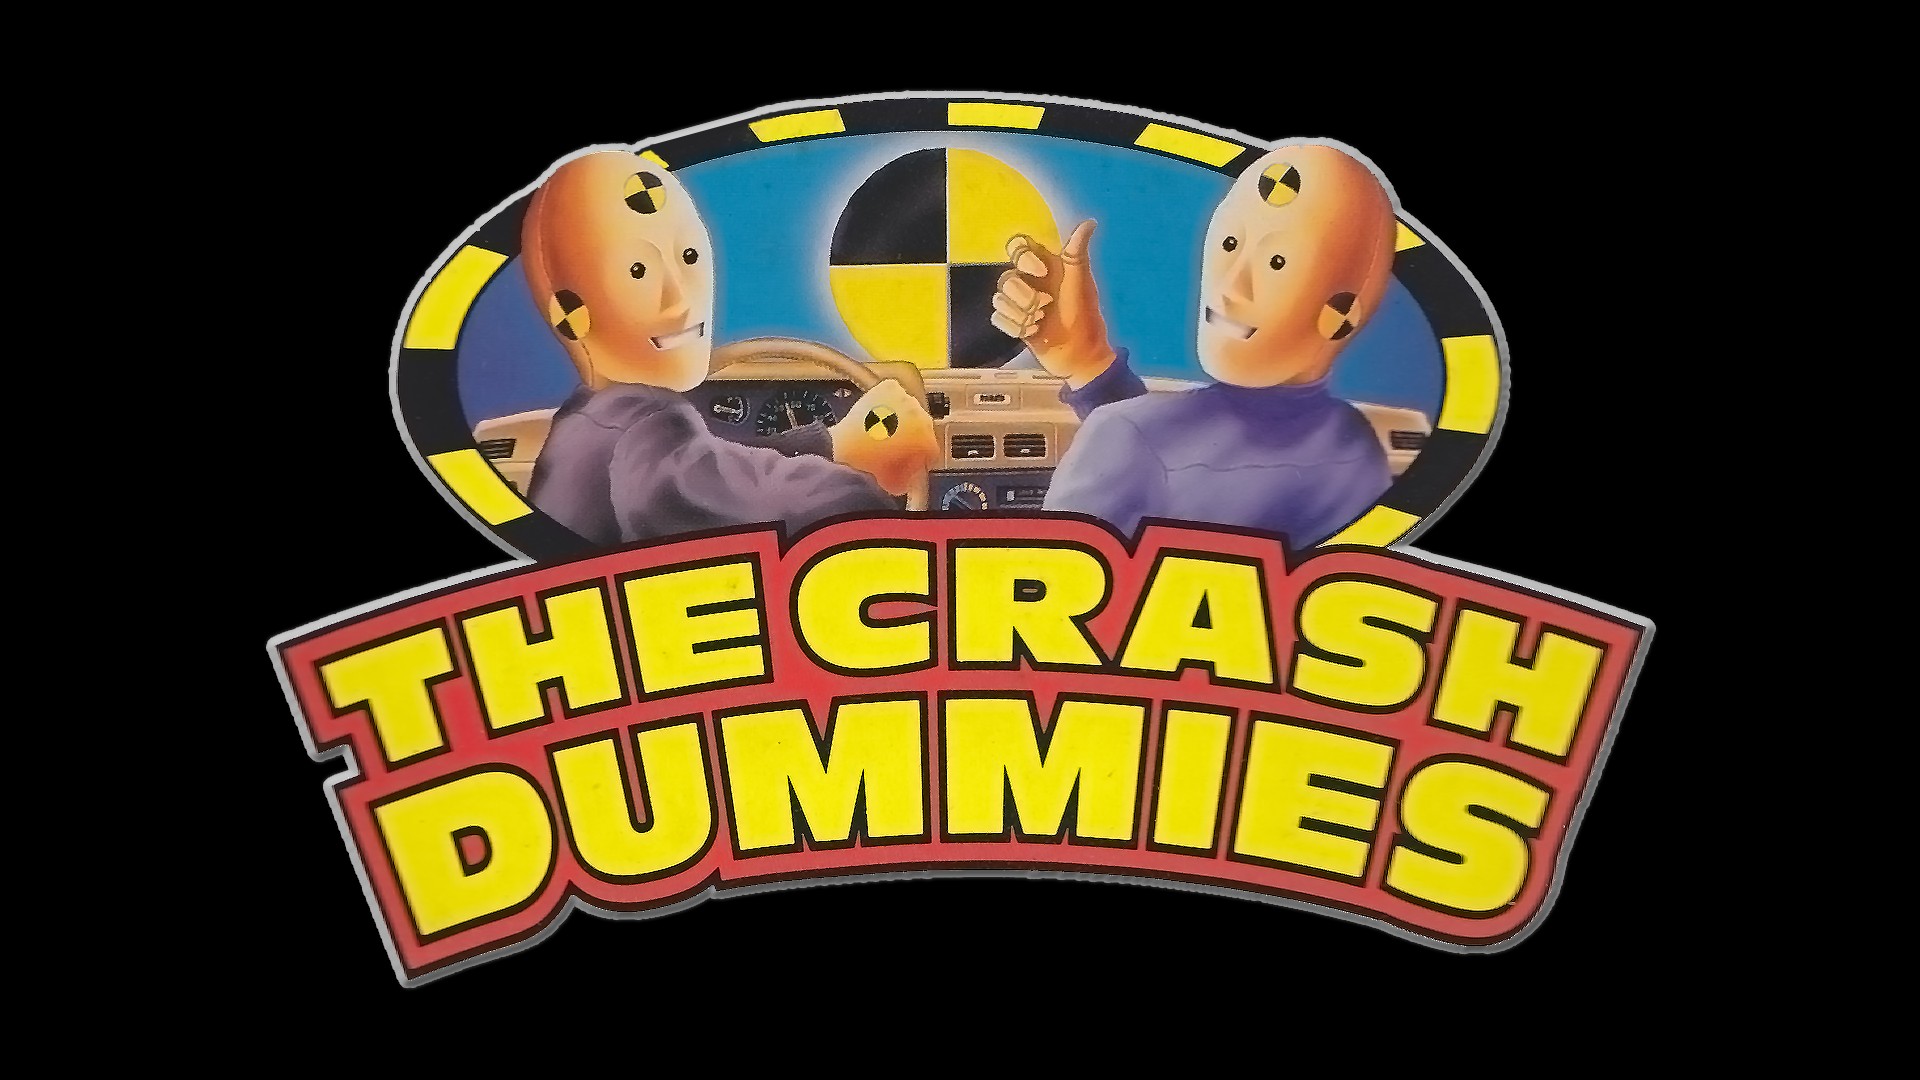 The Incredible Crash Dummies #24